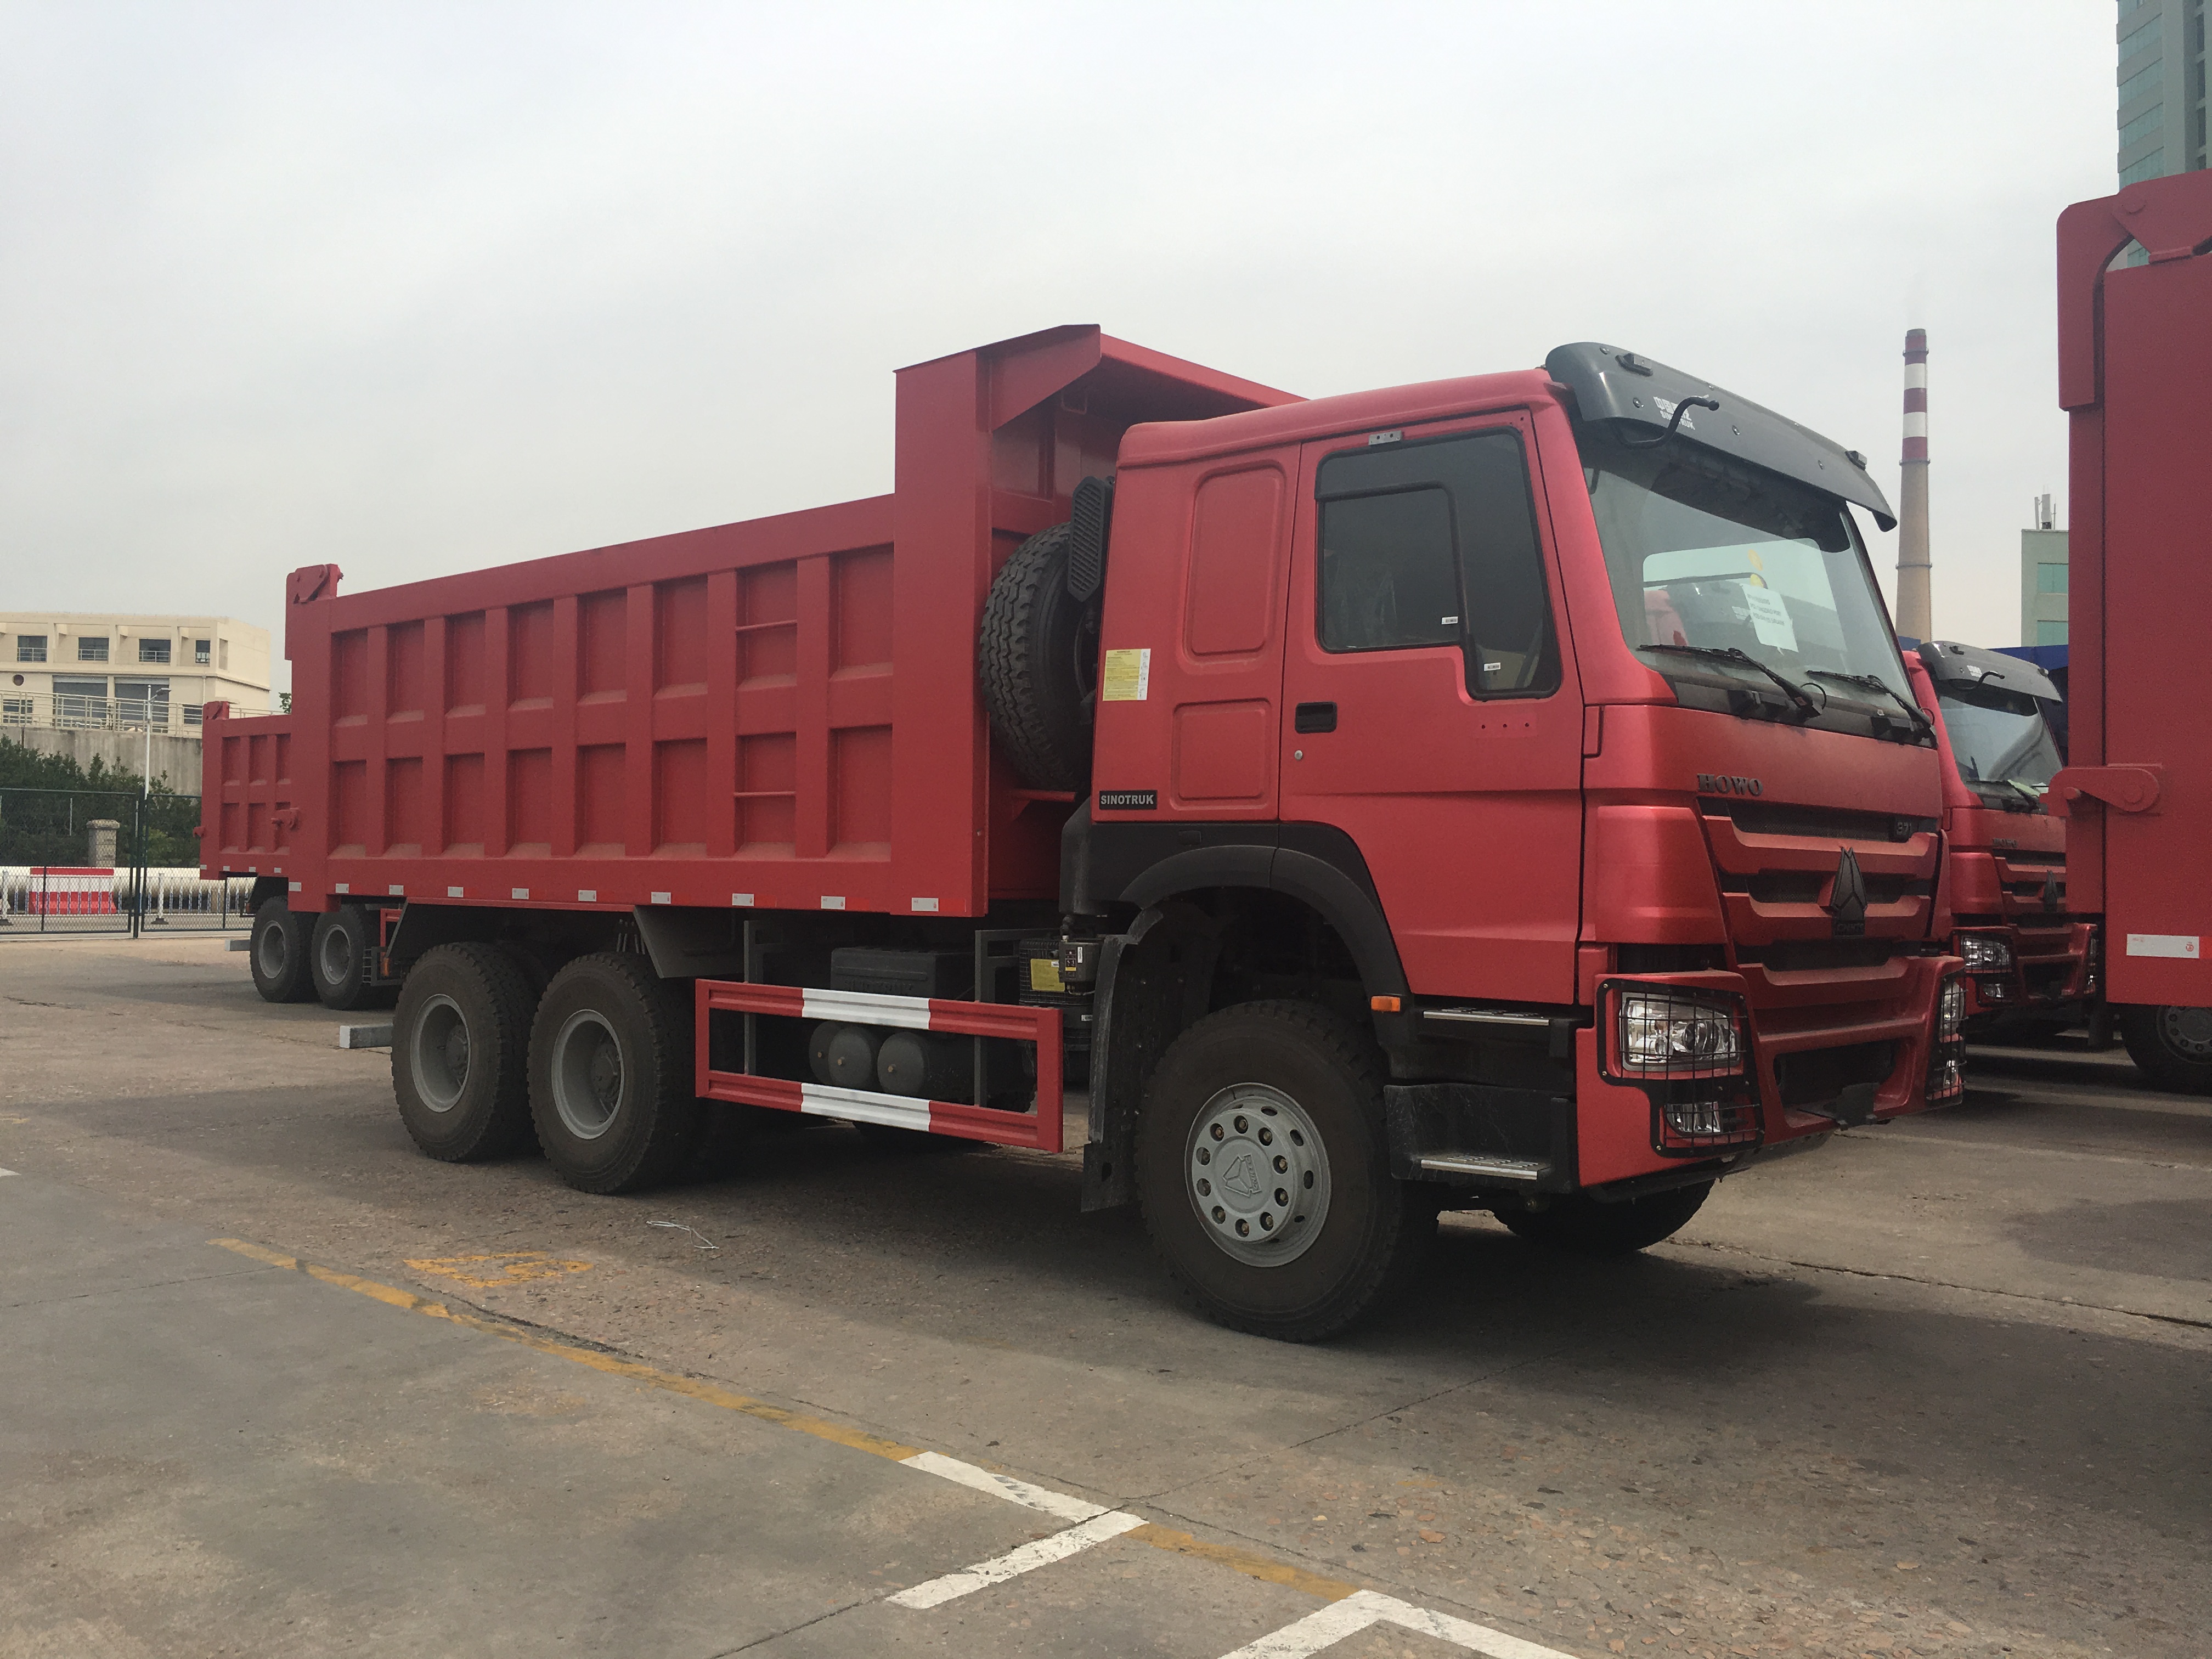 2021 new model hot sale howo tipper dump truck